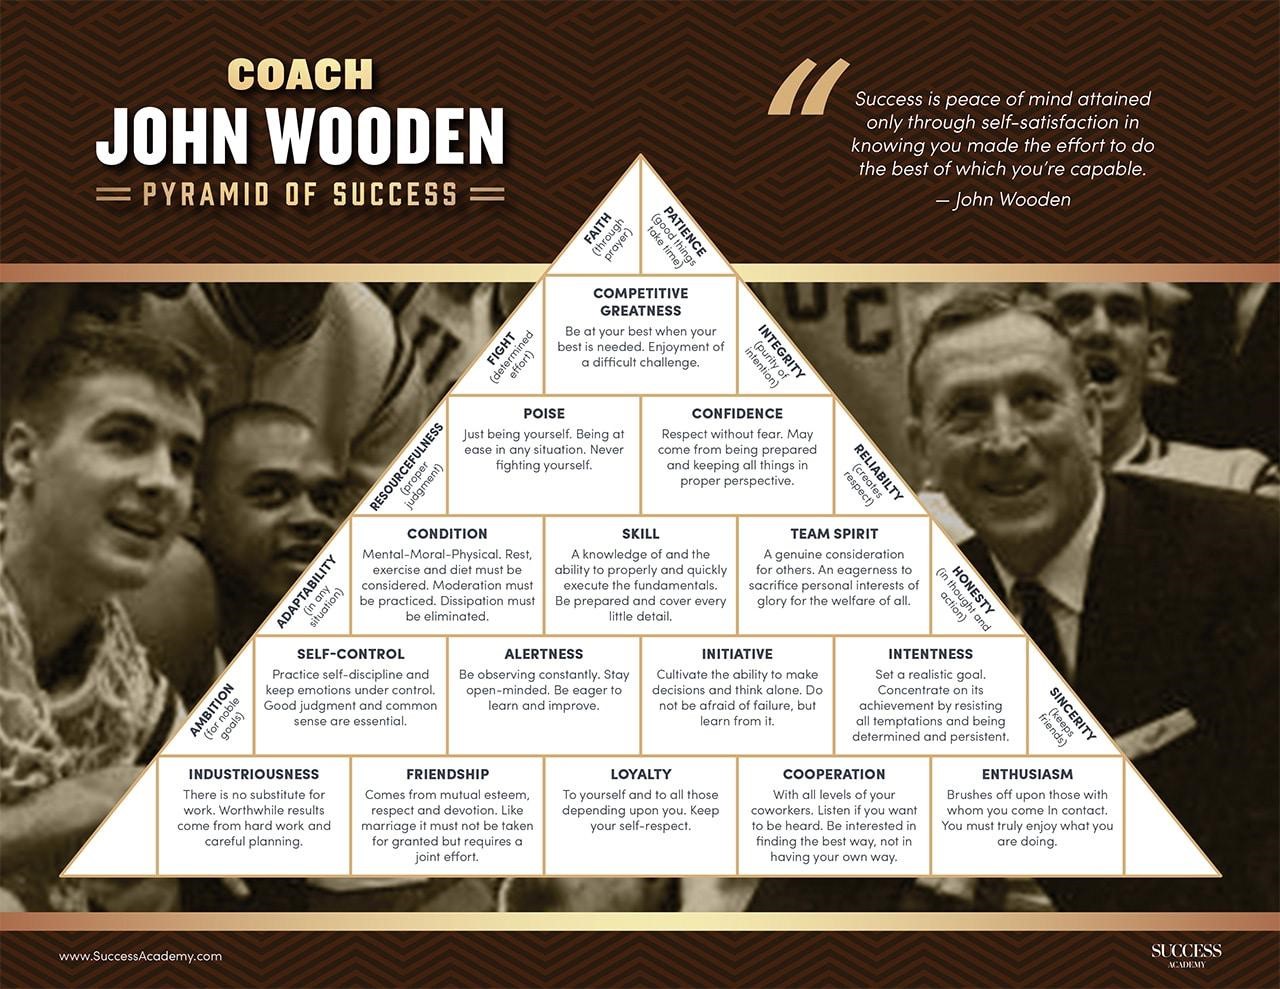 John wooden